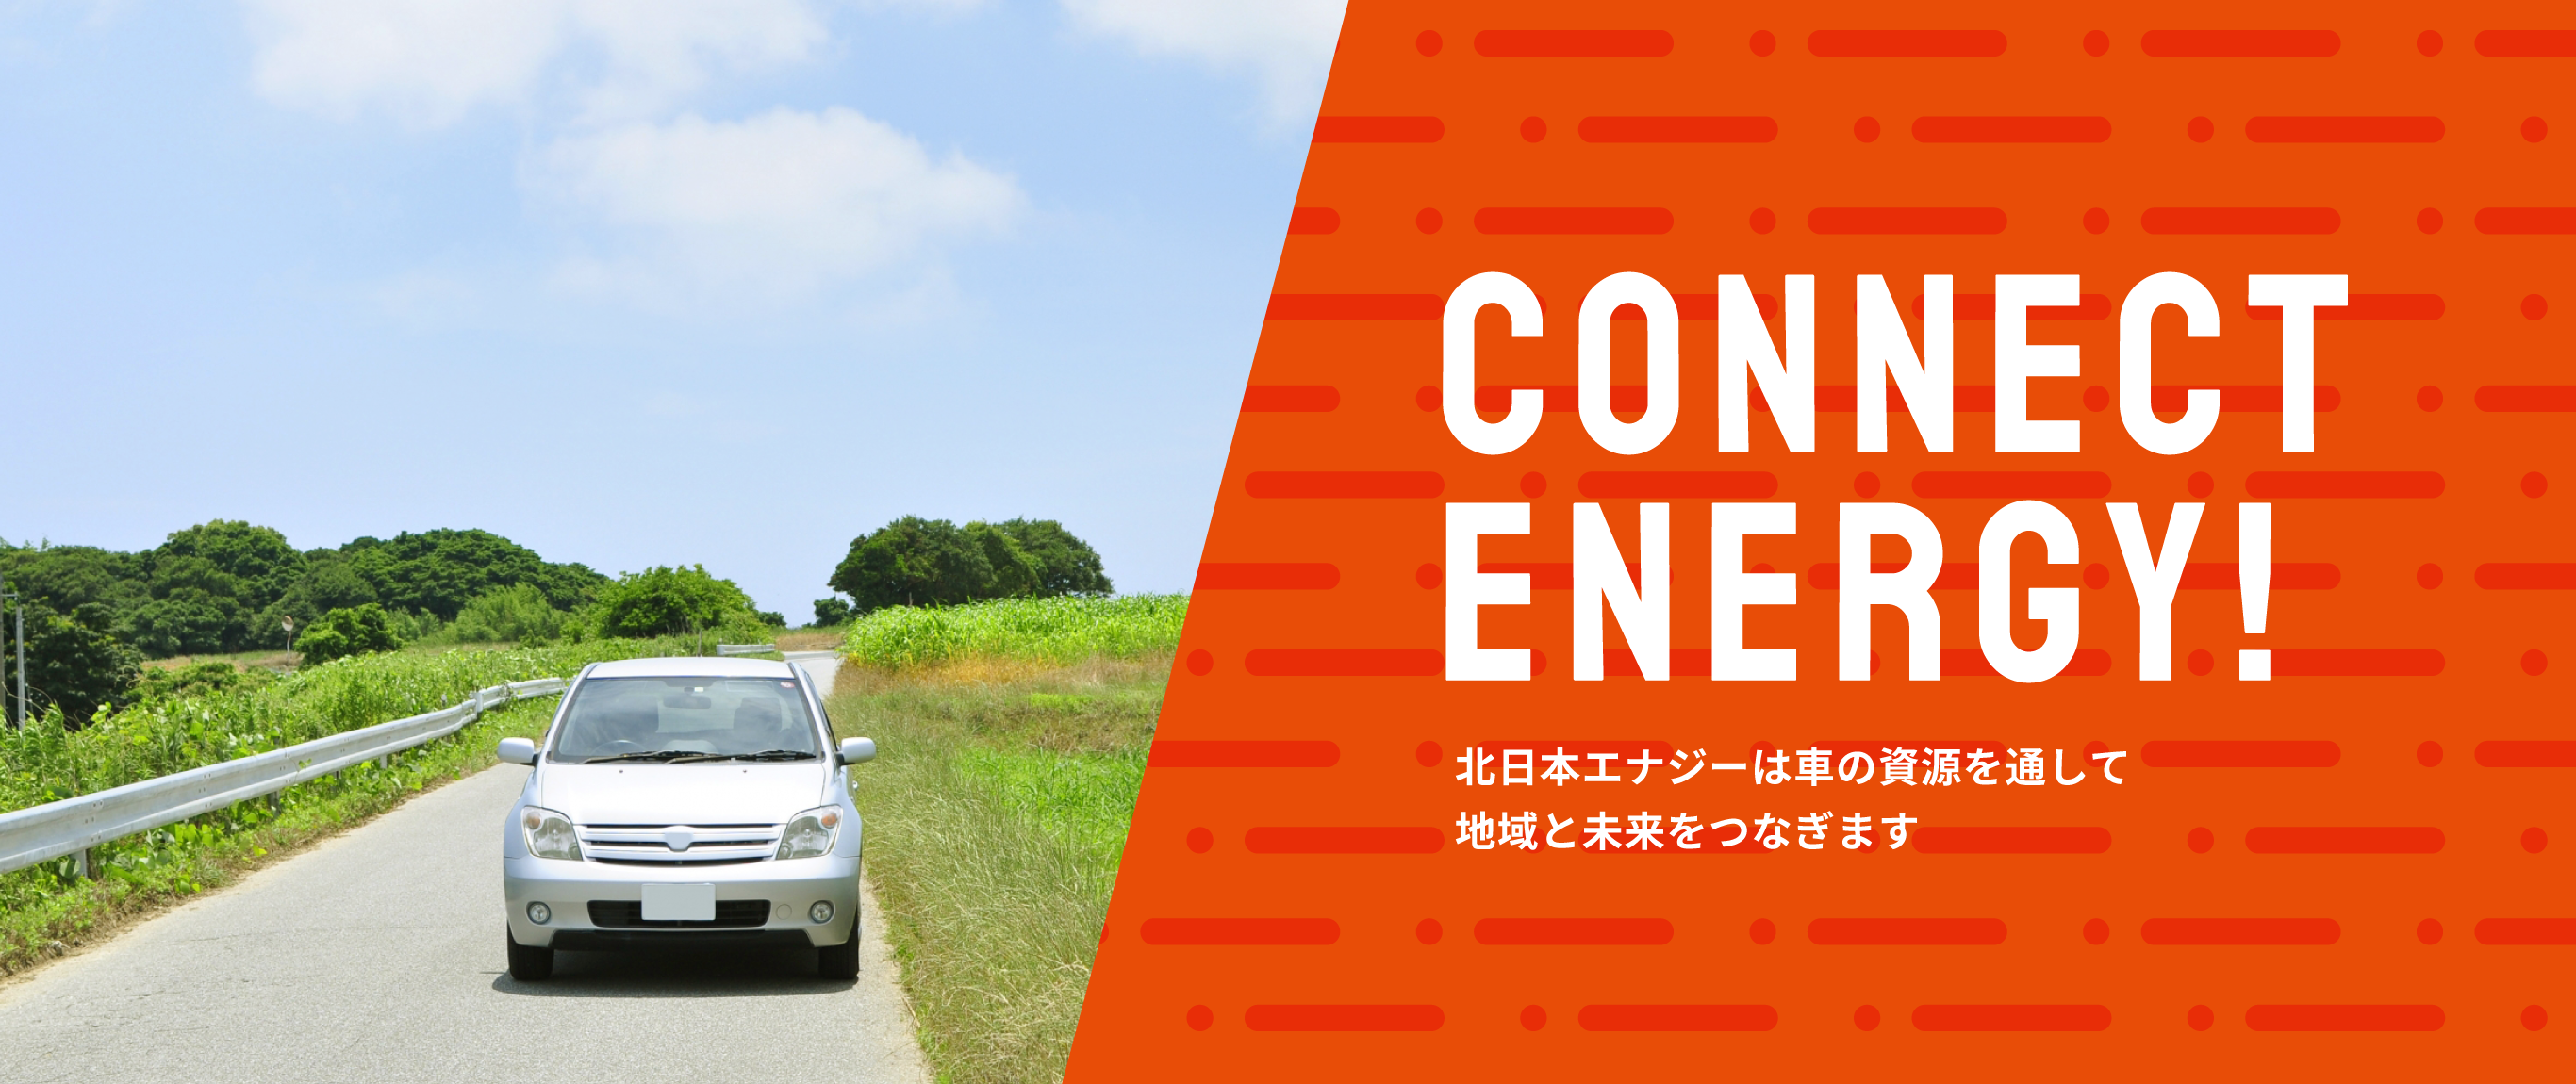 CONNECT ENERGY！北日本エナジーは車の資源を通して地域と未来をつなぎます